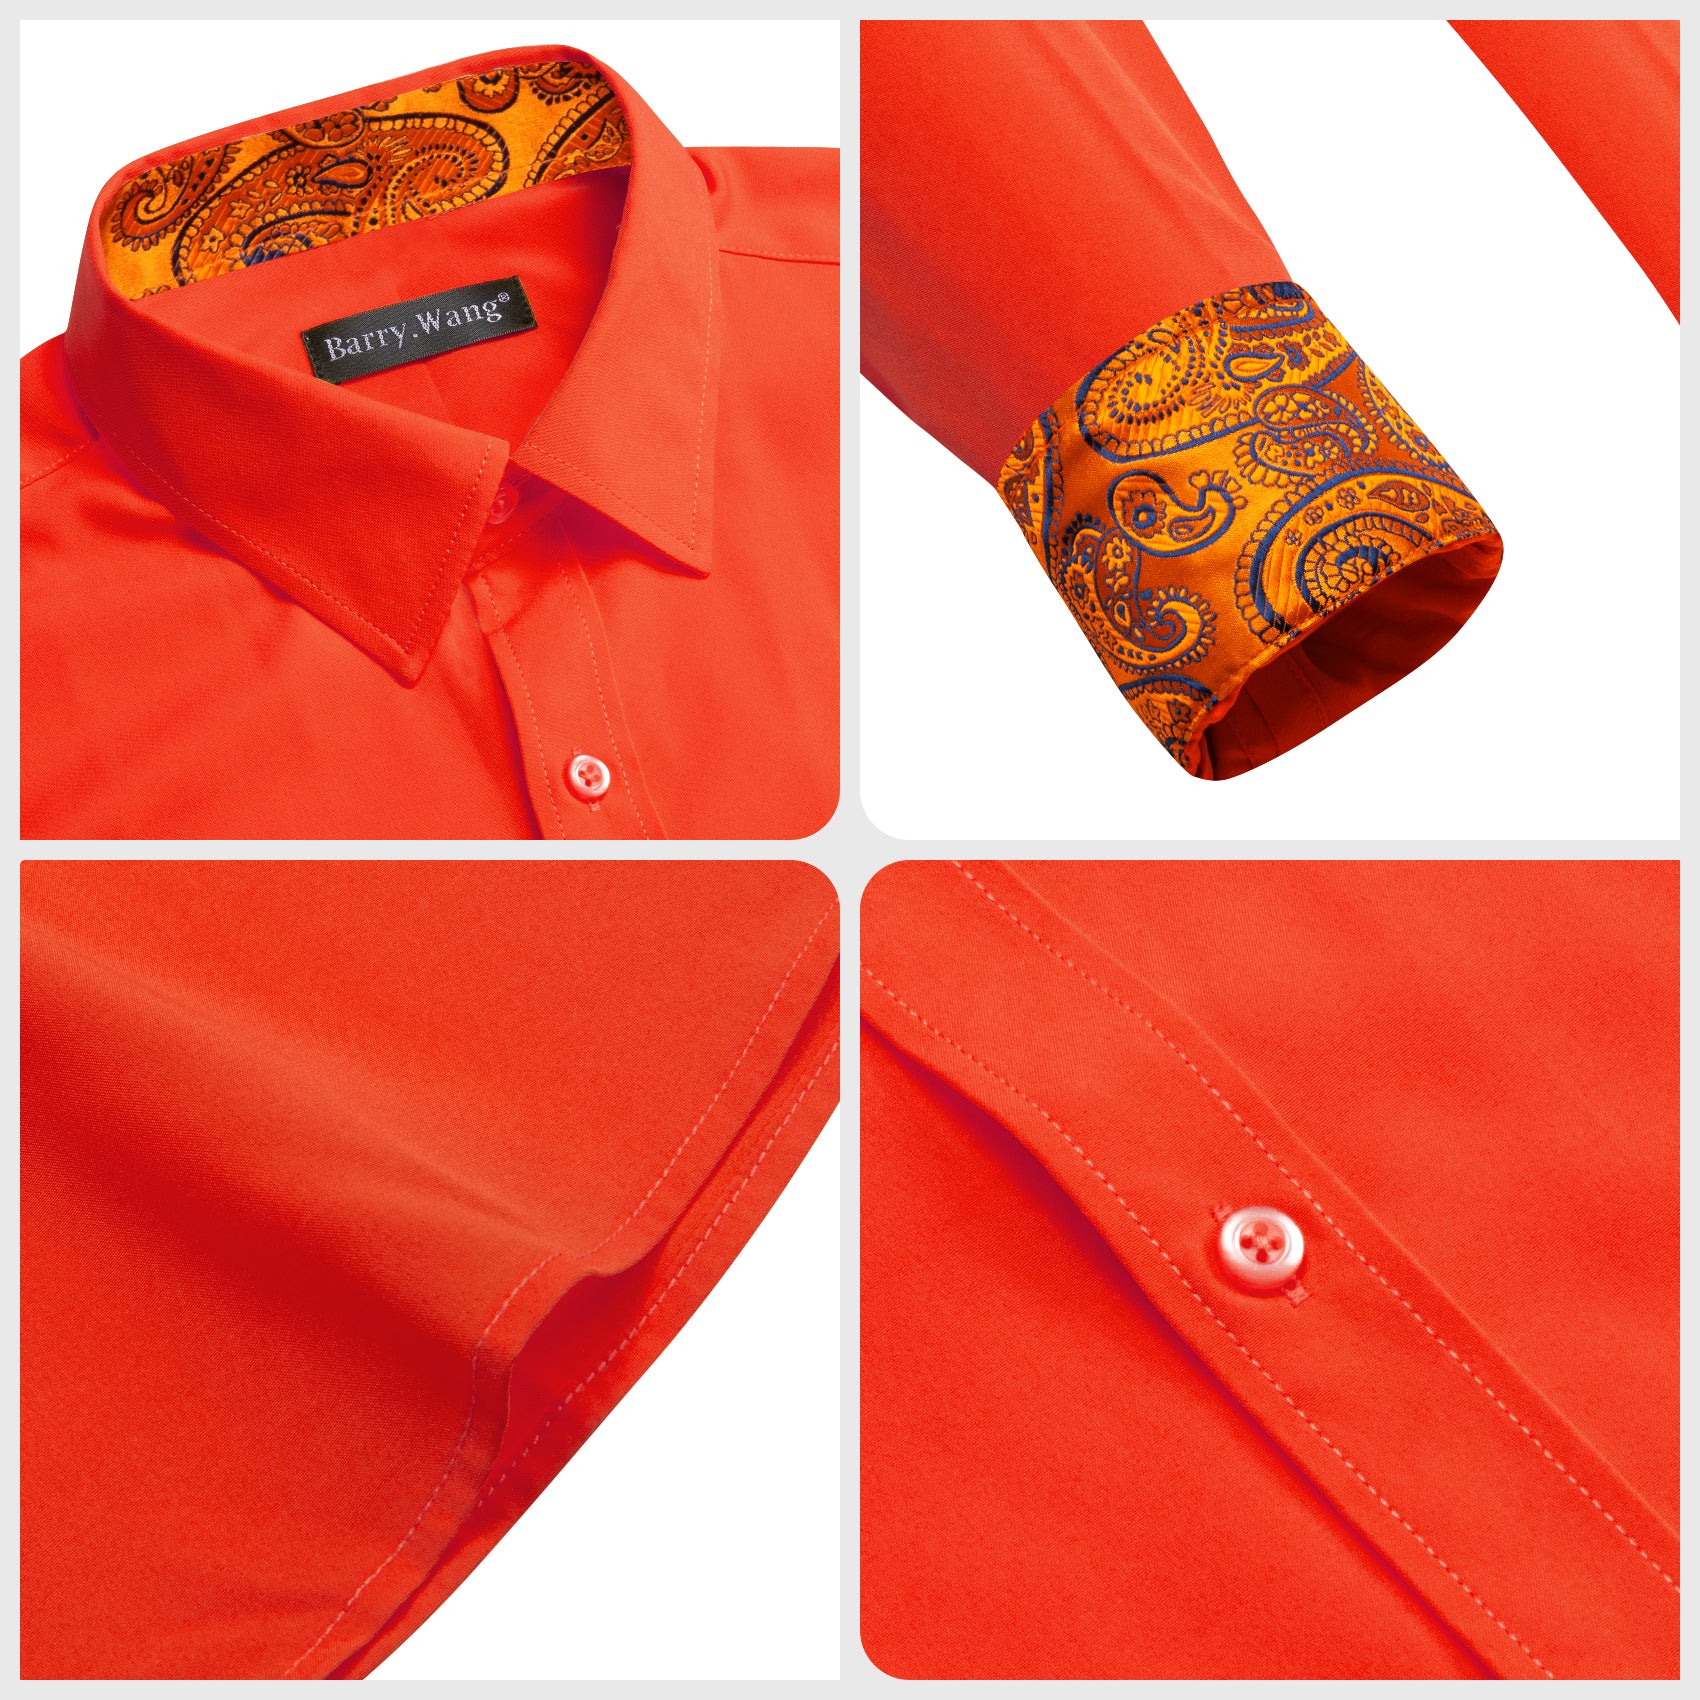 Barry Wang Formal OrangeRed Chocolate Splicing Men's Business Shirt